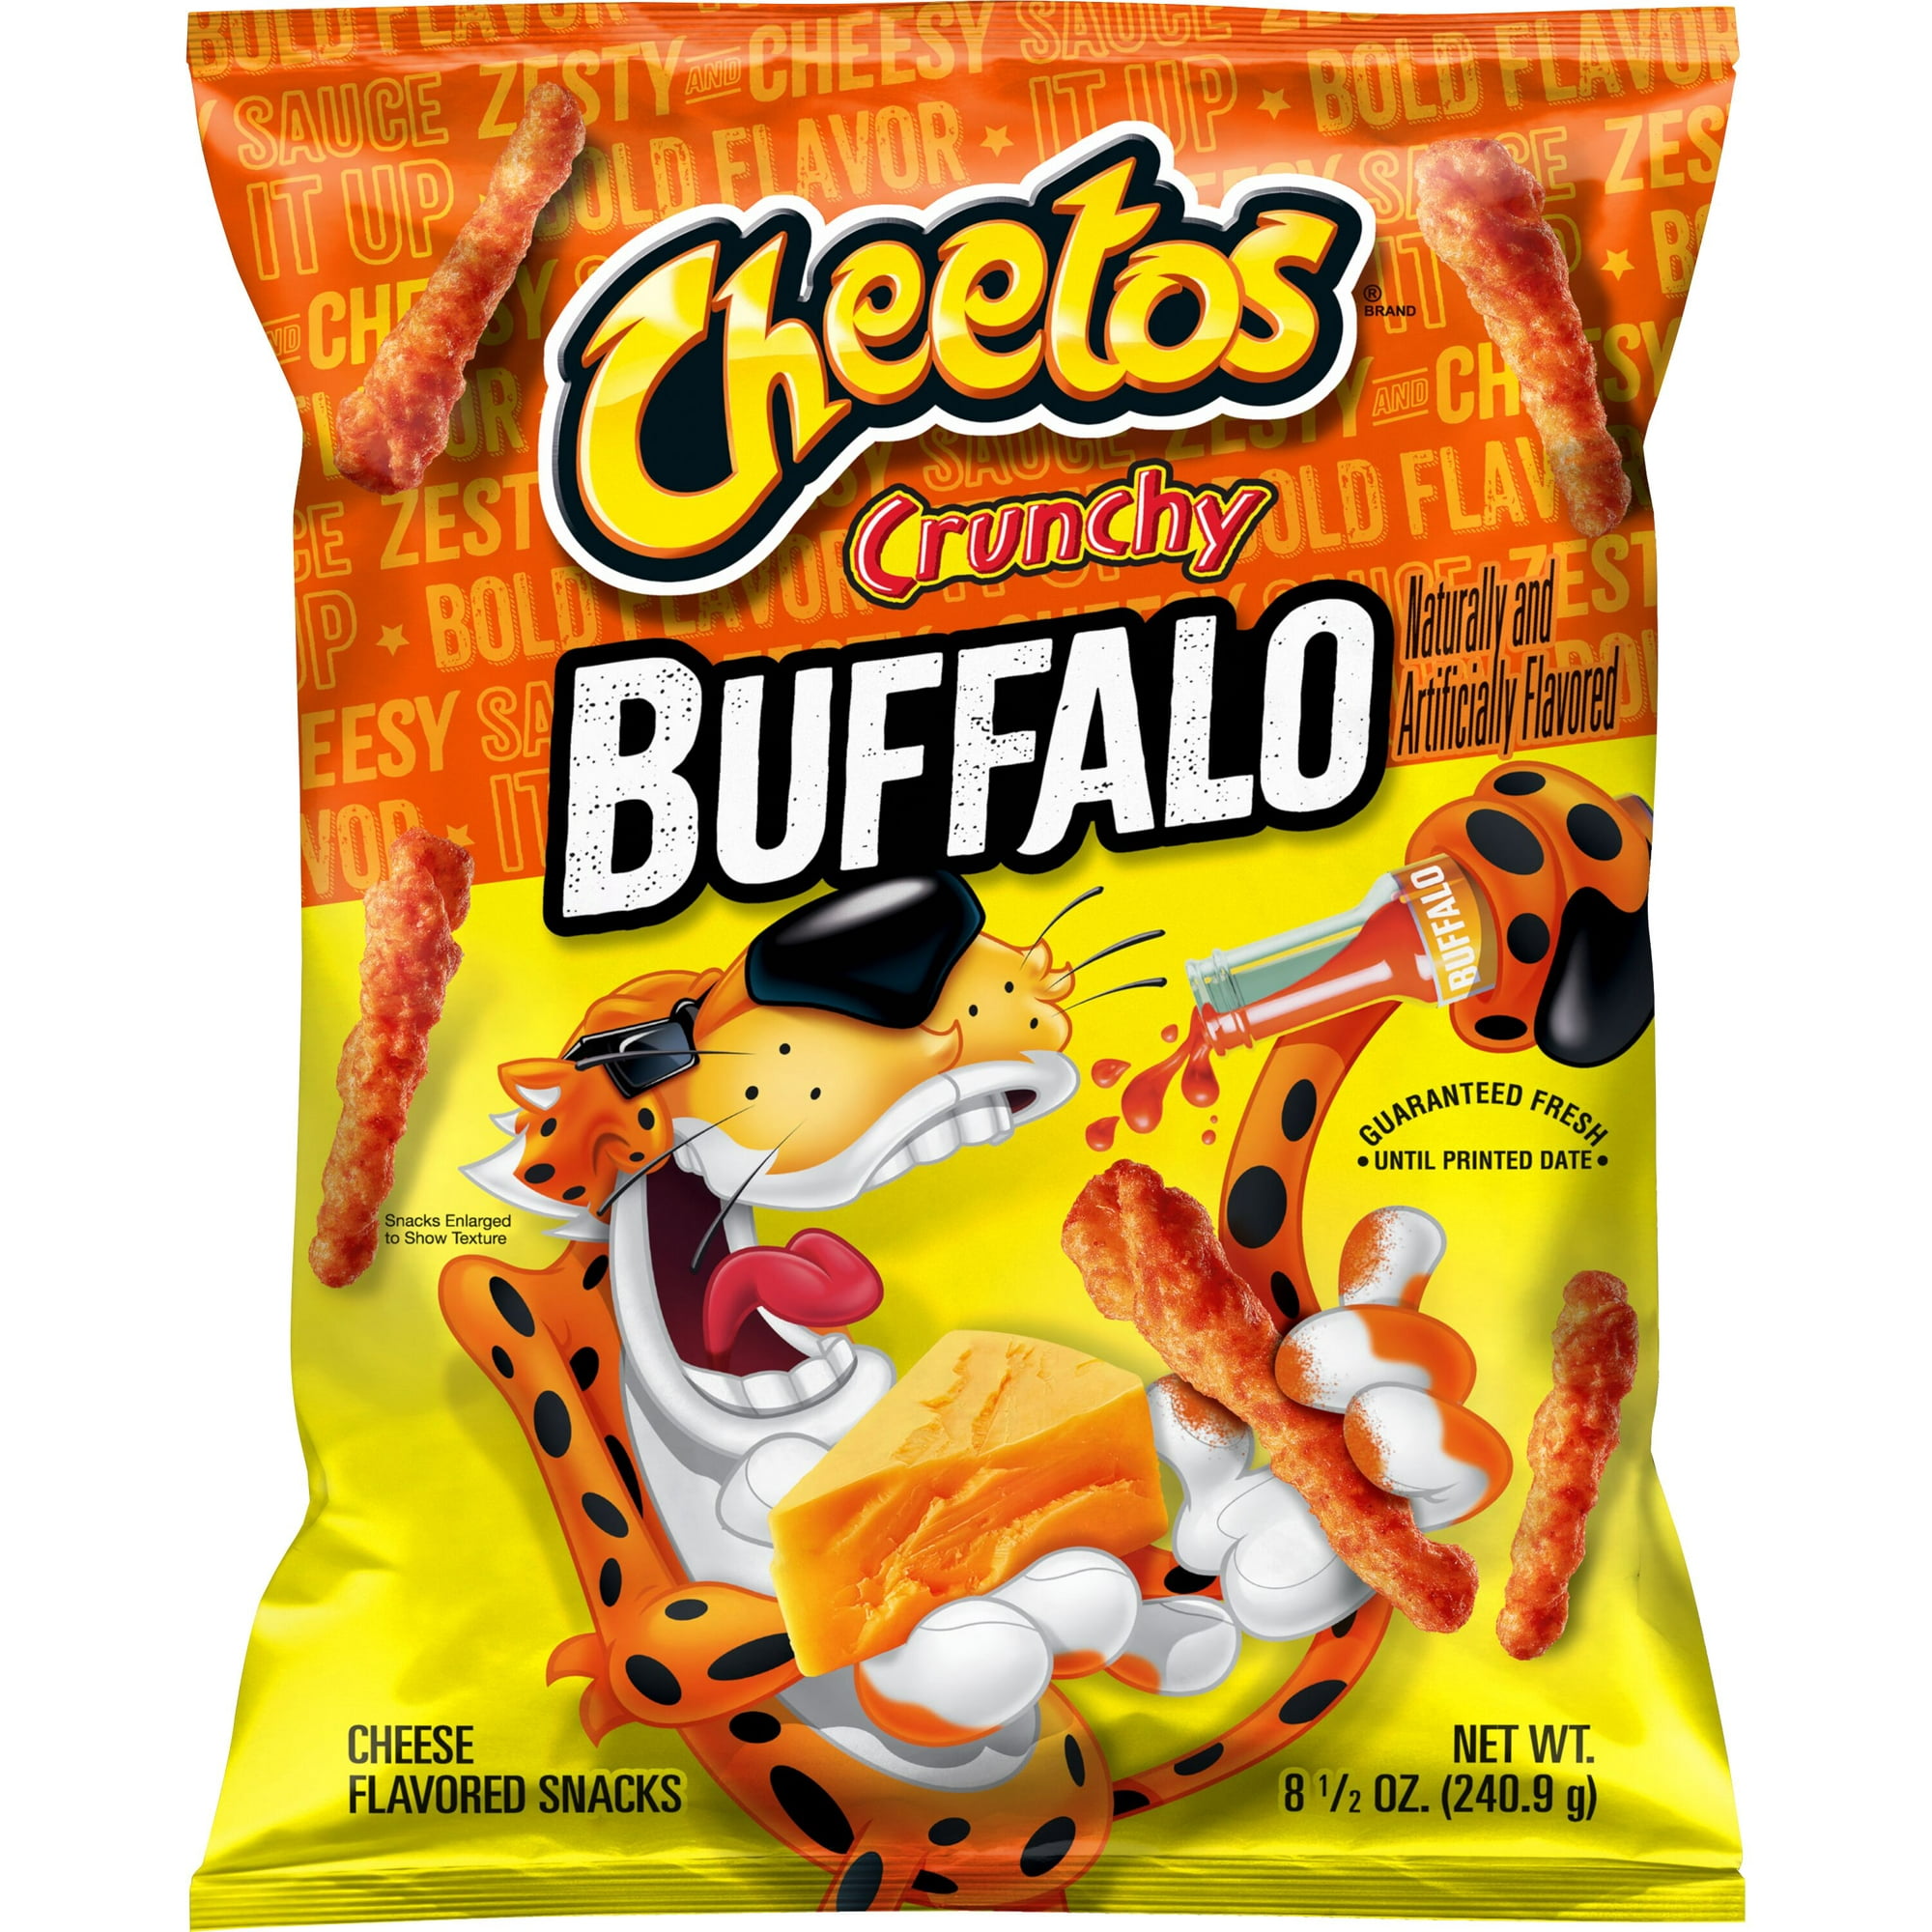 Cheetos-Crunchy-Cheese-Buffalo-Flavored-Snack-Chips-8-5oz-Bag_d1c53c75-1b5a-4dbd-ac8a-e5ab2a631a29.df0c63ff335793e59f5cdd7b2813fdfa.jpeg